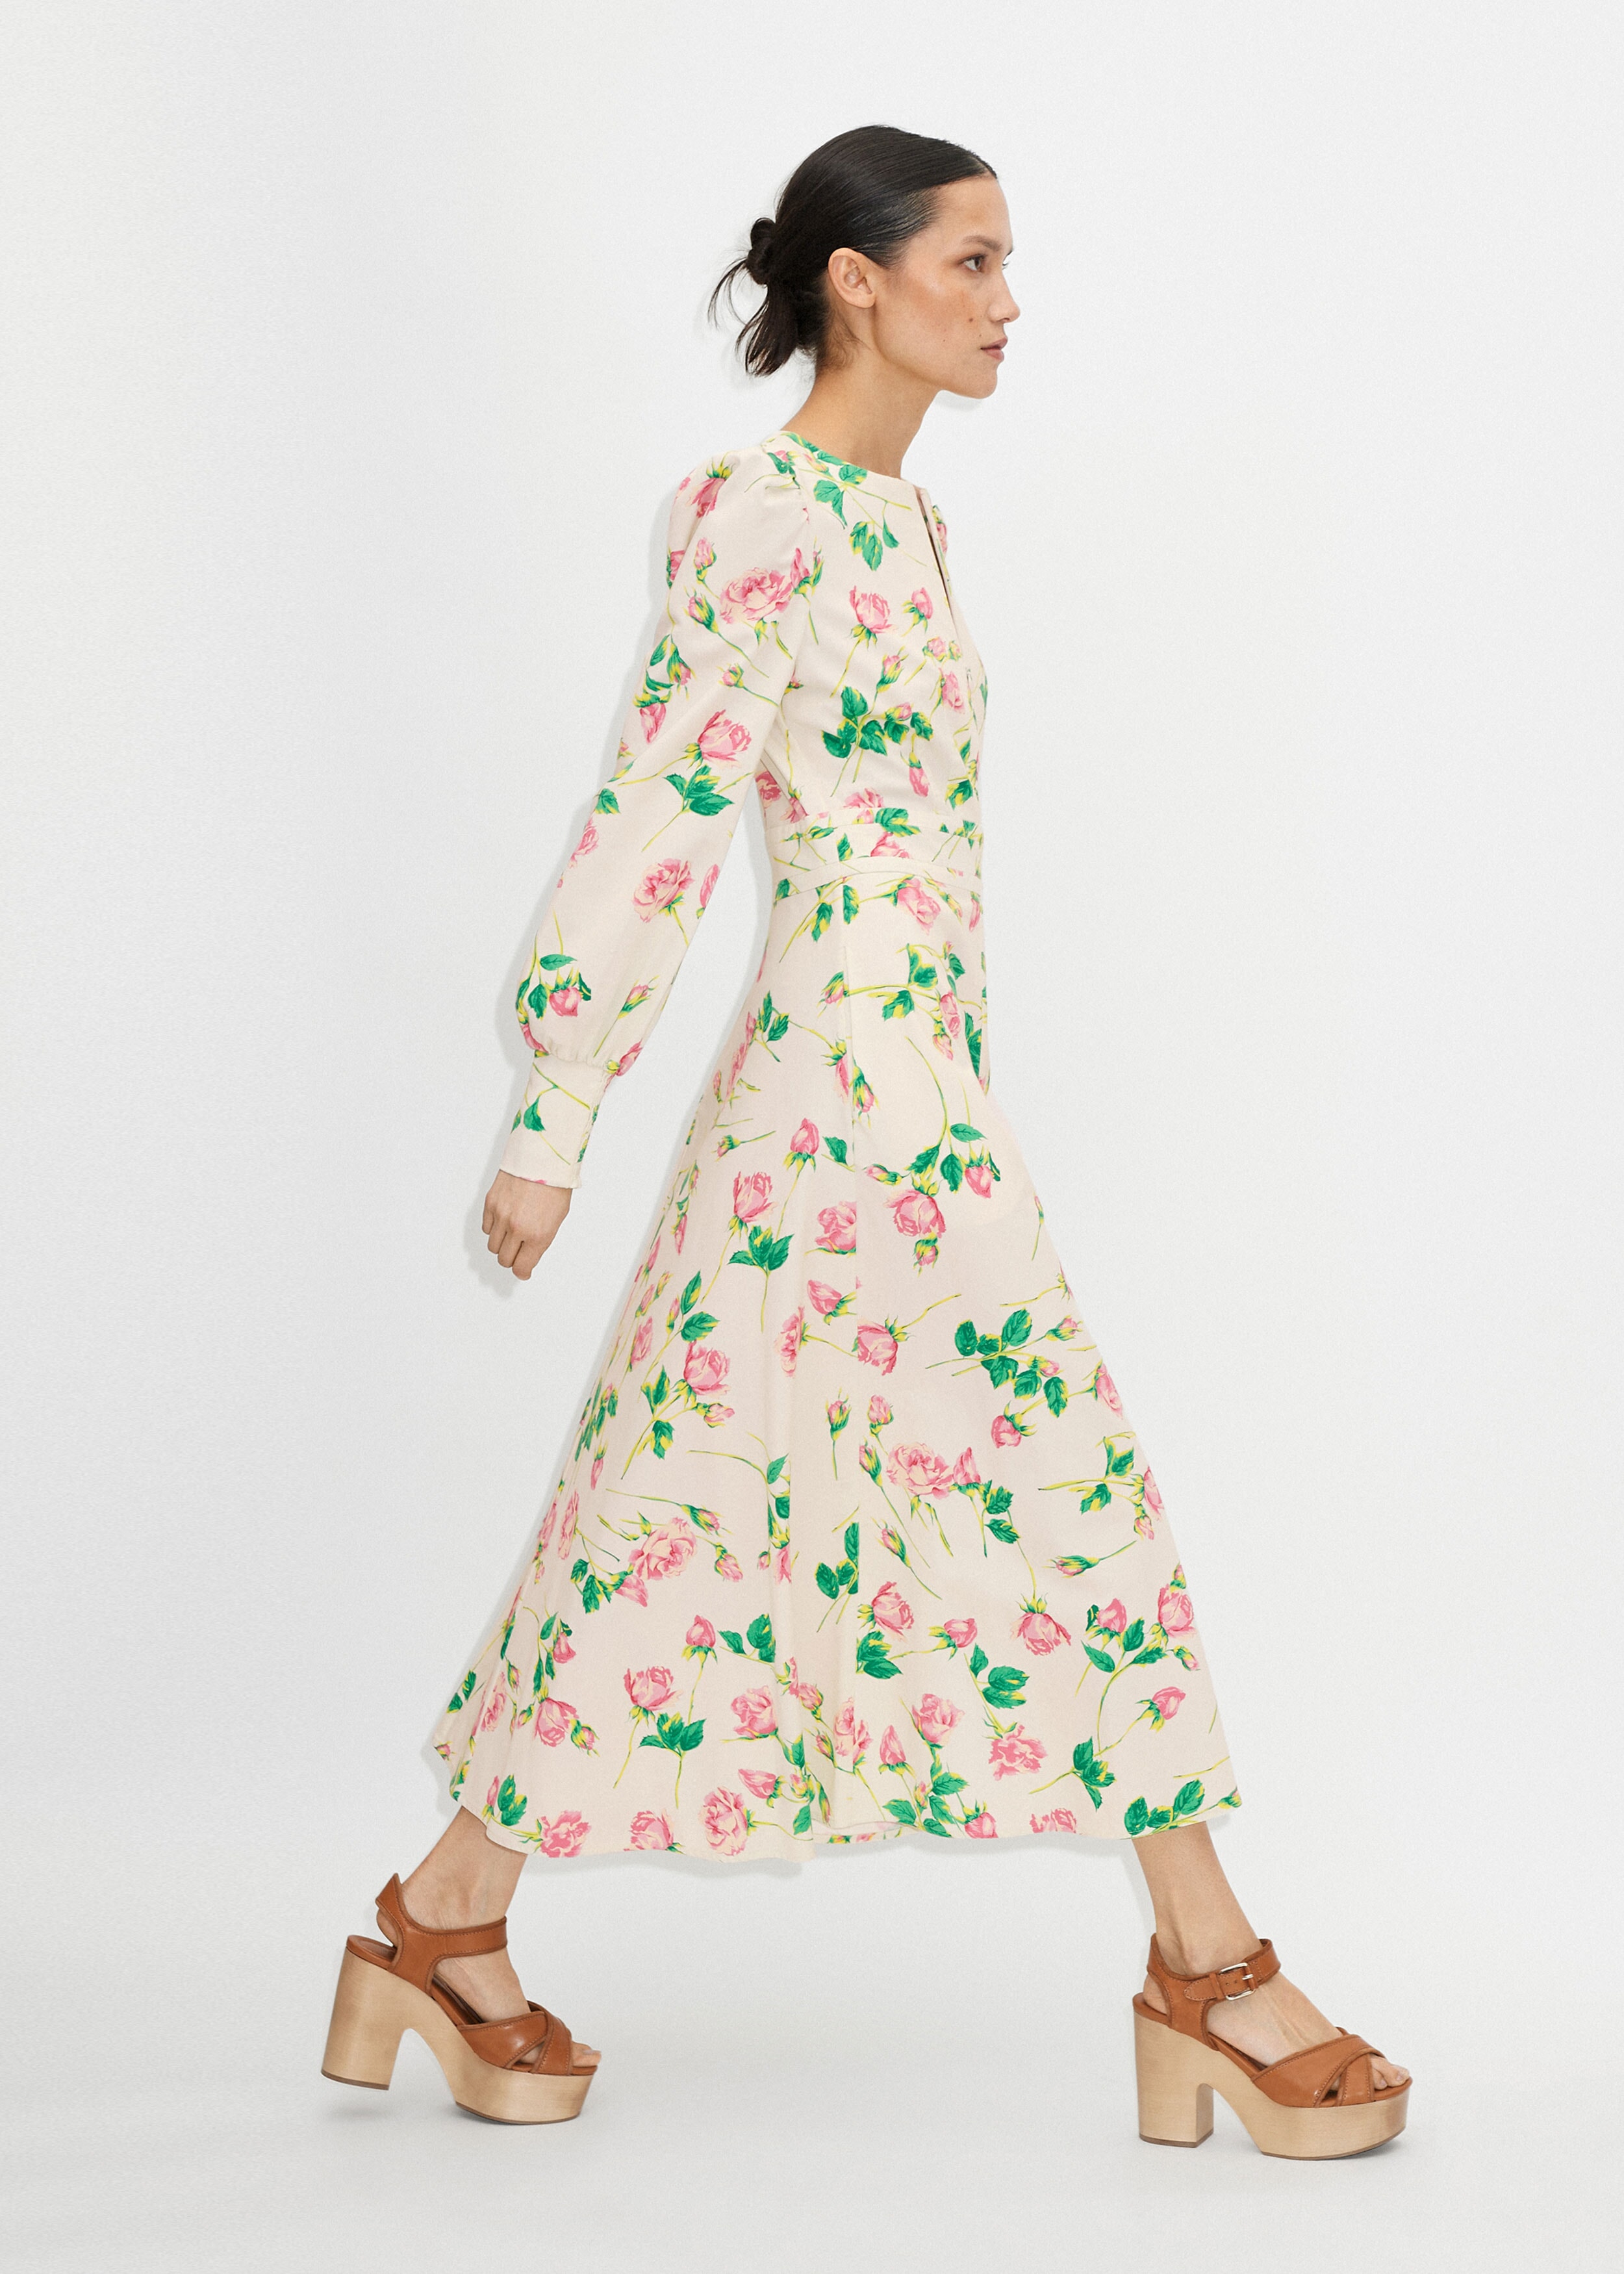 Rose Print Structured Midi Dress Light Cream/Bright Rose/Green